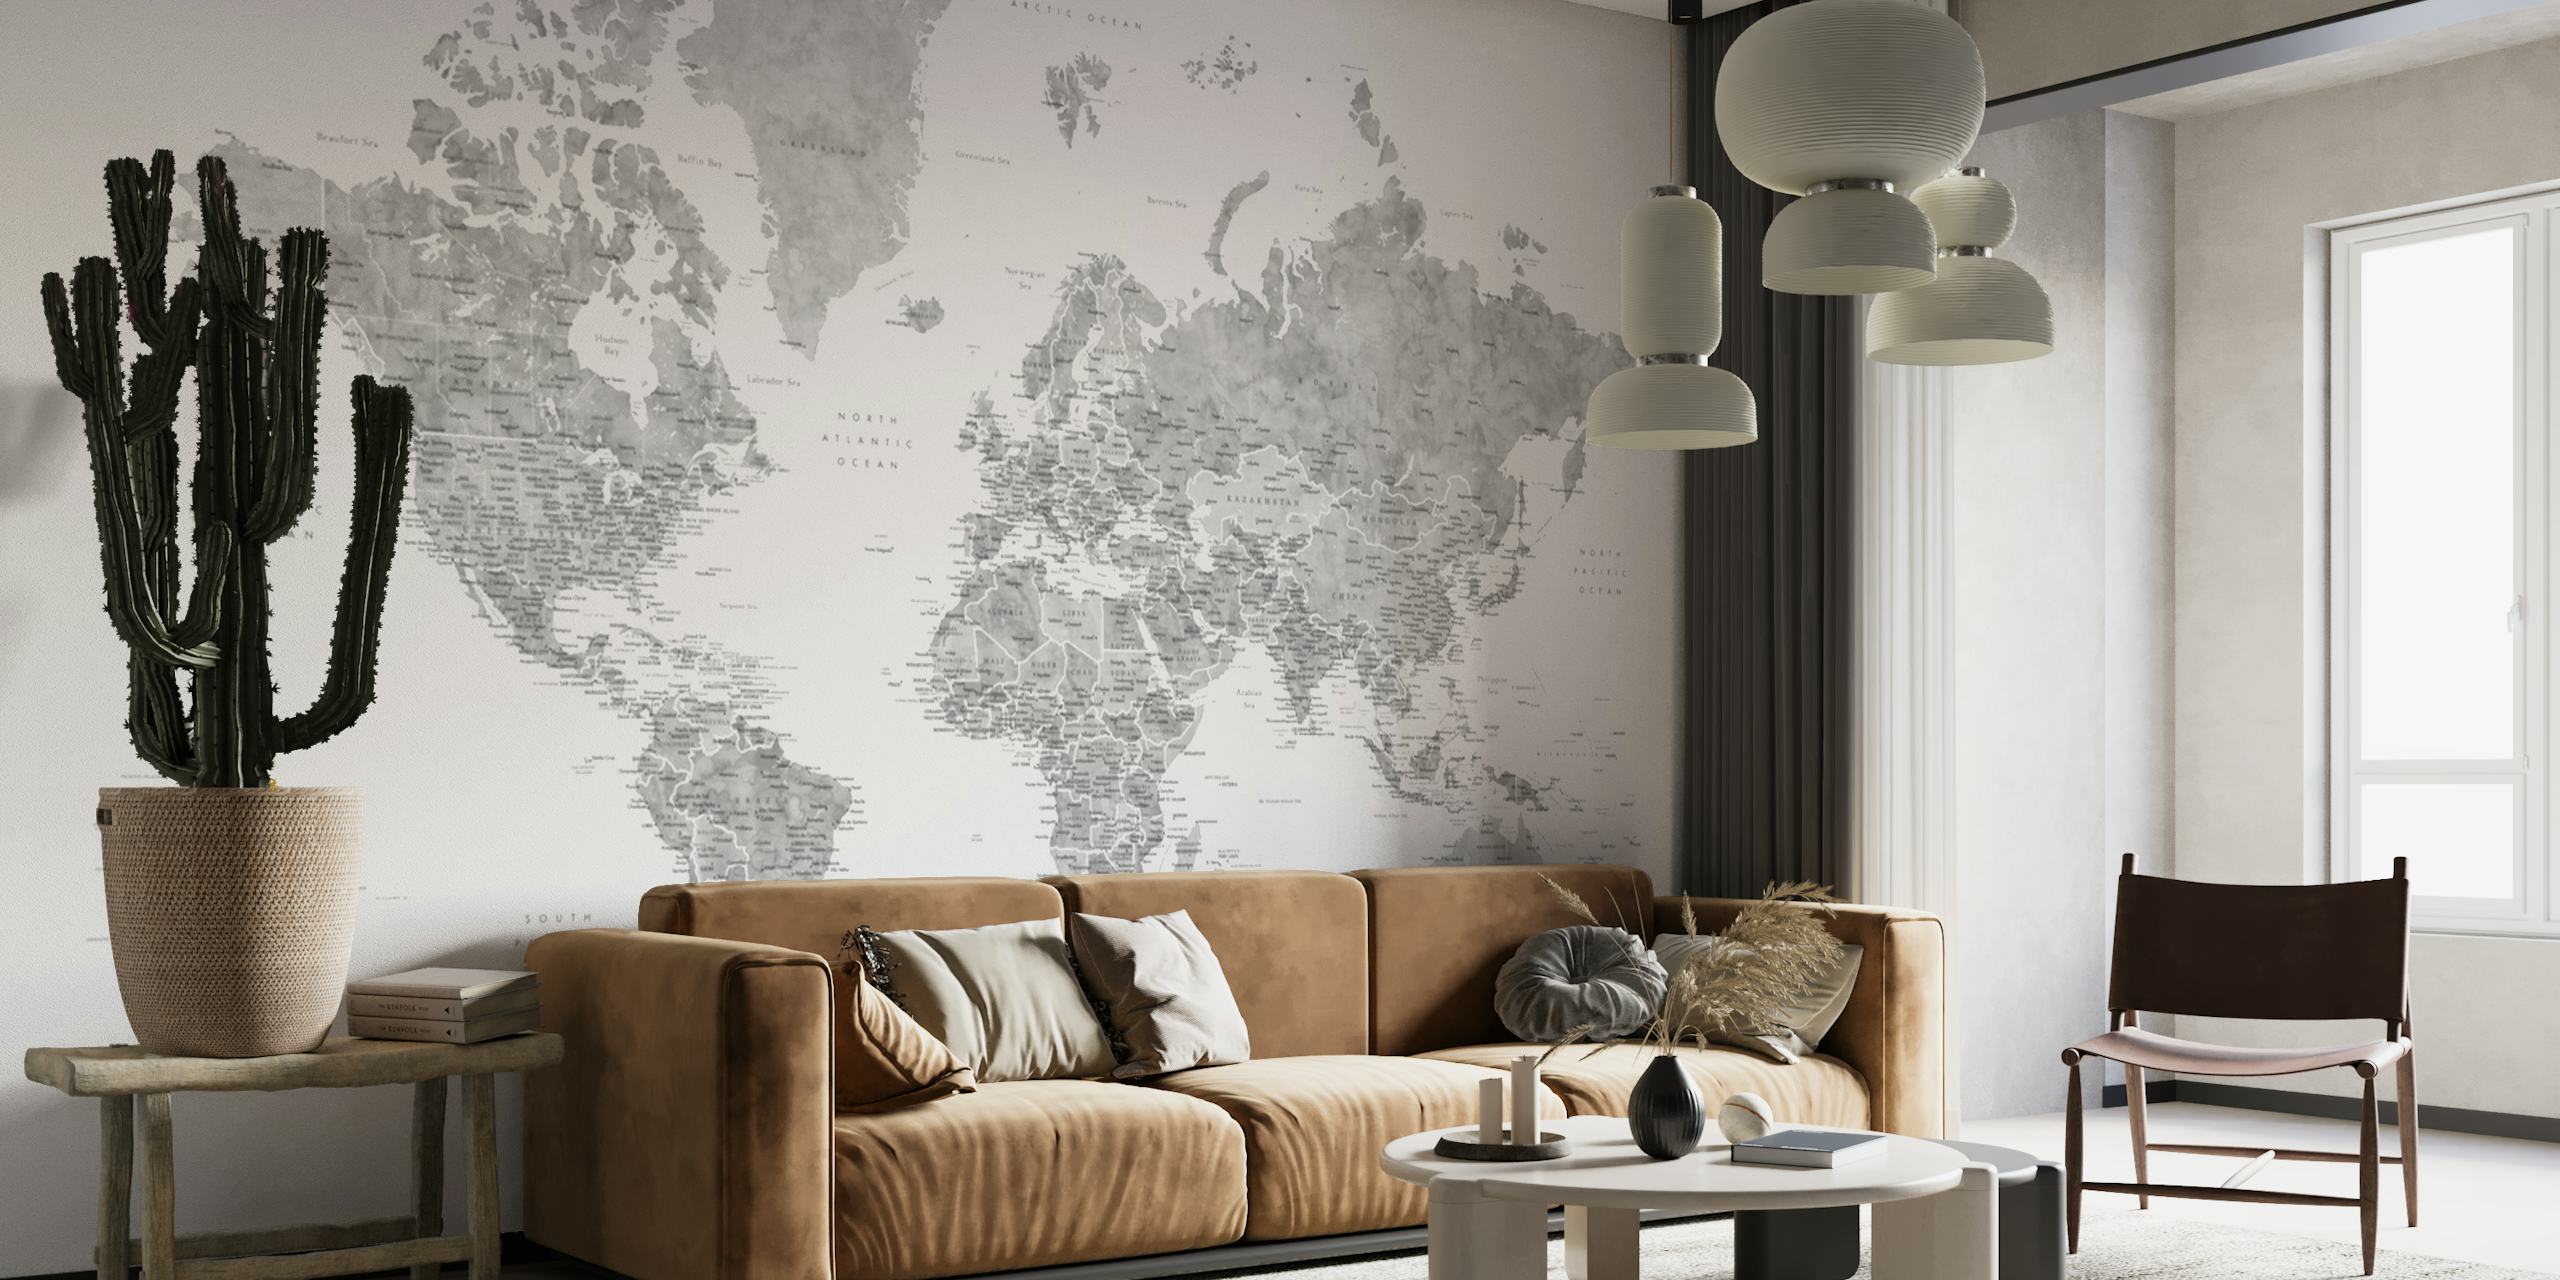 Deailed world map Jimmy wallpaper